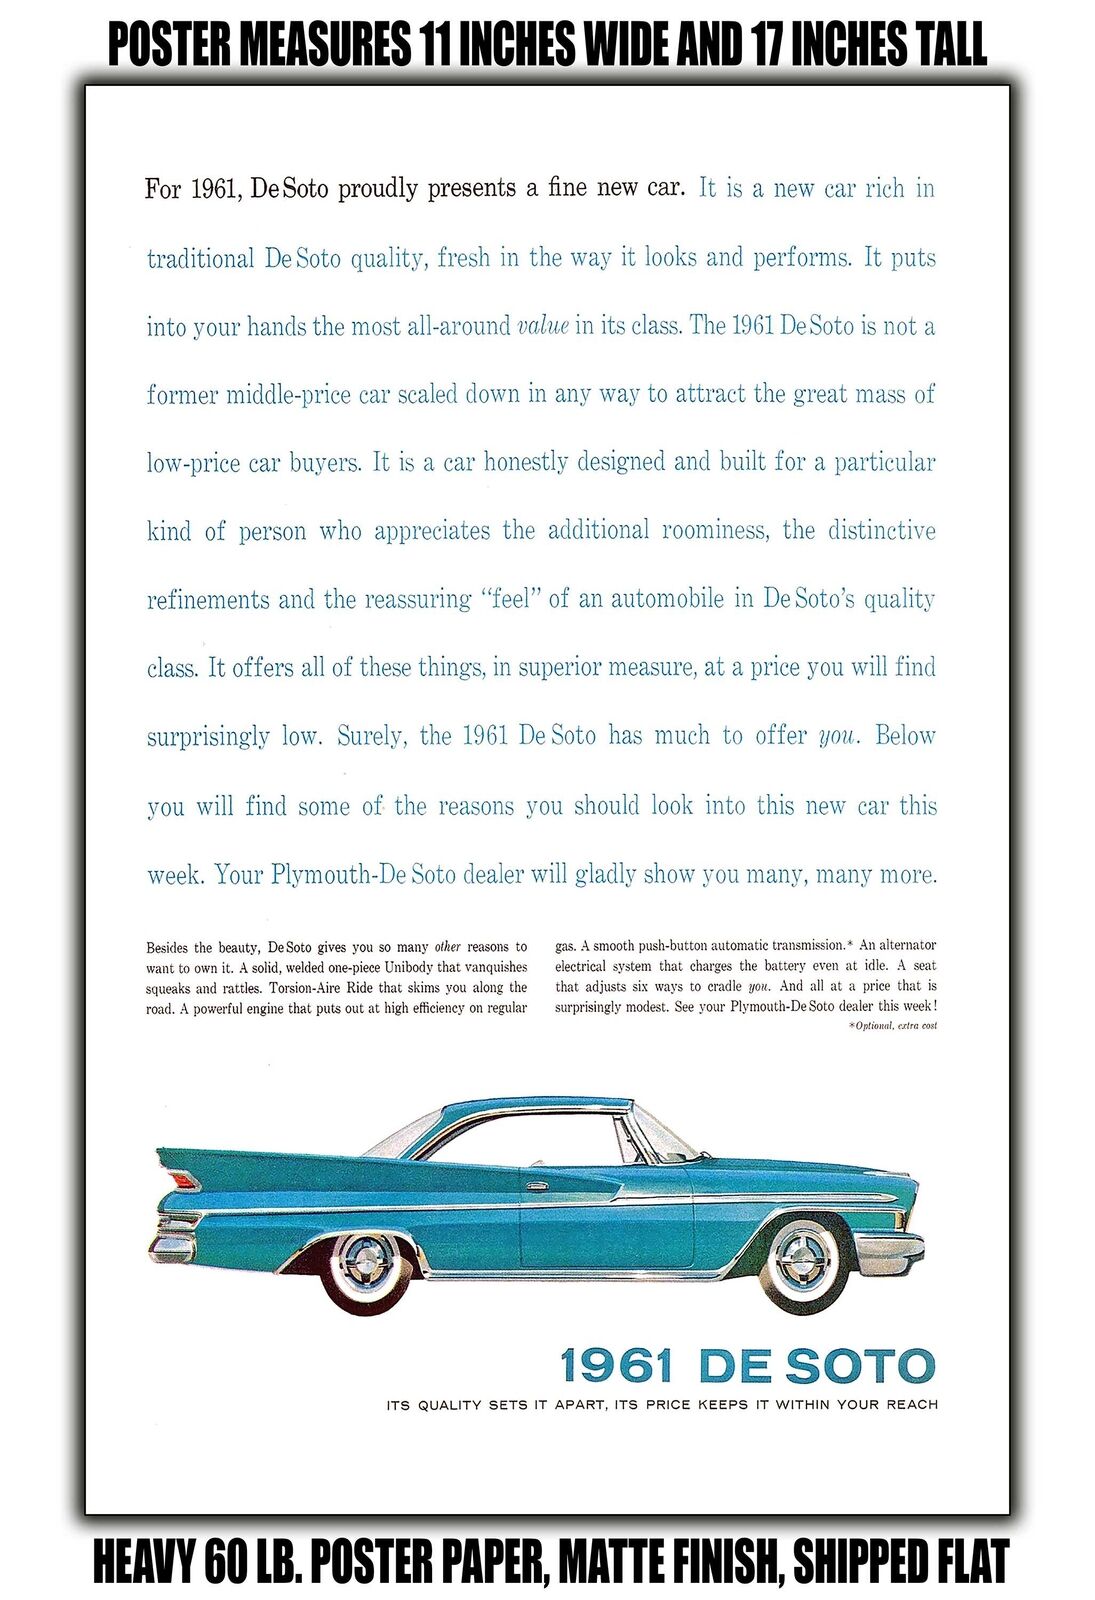 11x17 POSTER - 1961 DeSoto Proudly Presents a Fine New Car